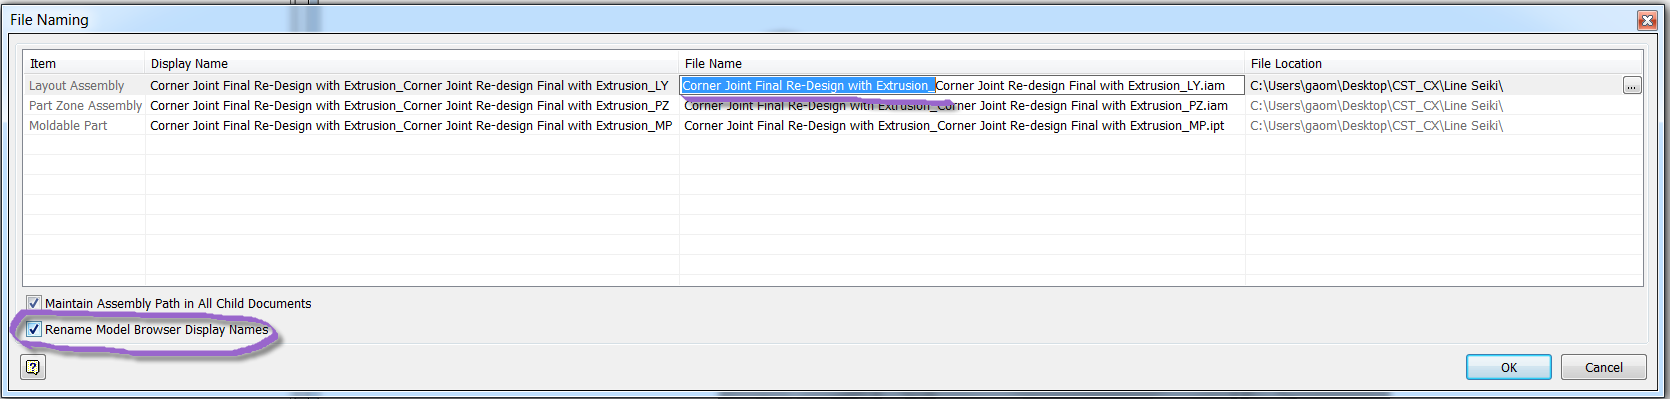 Rename model browser display names option.png